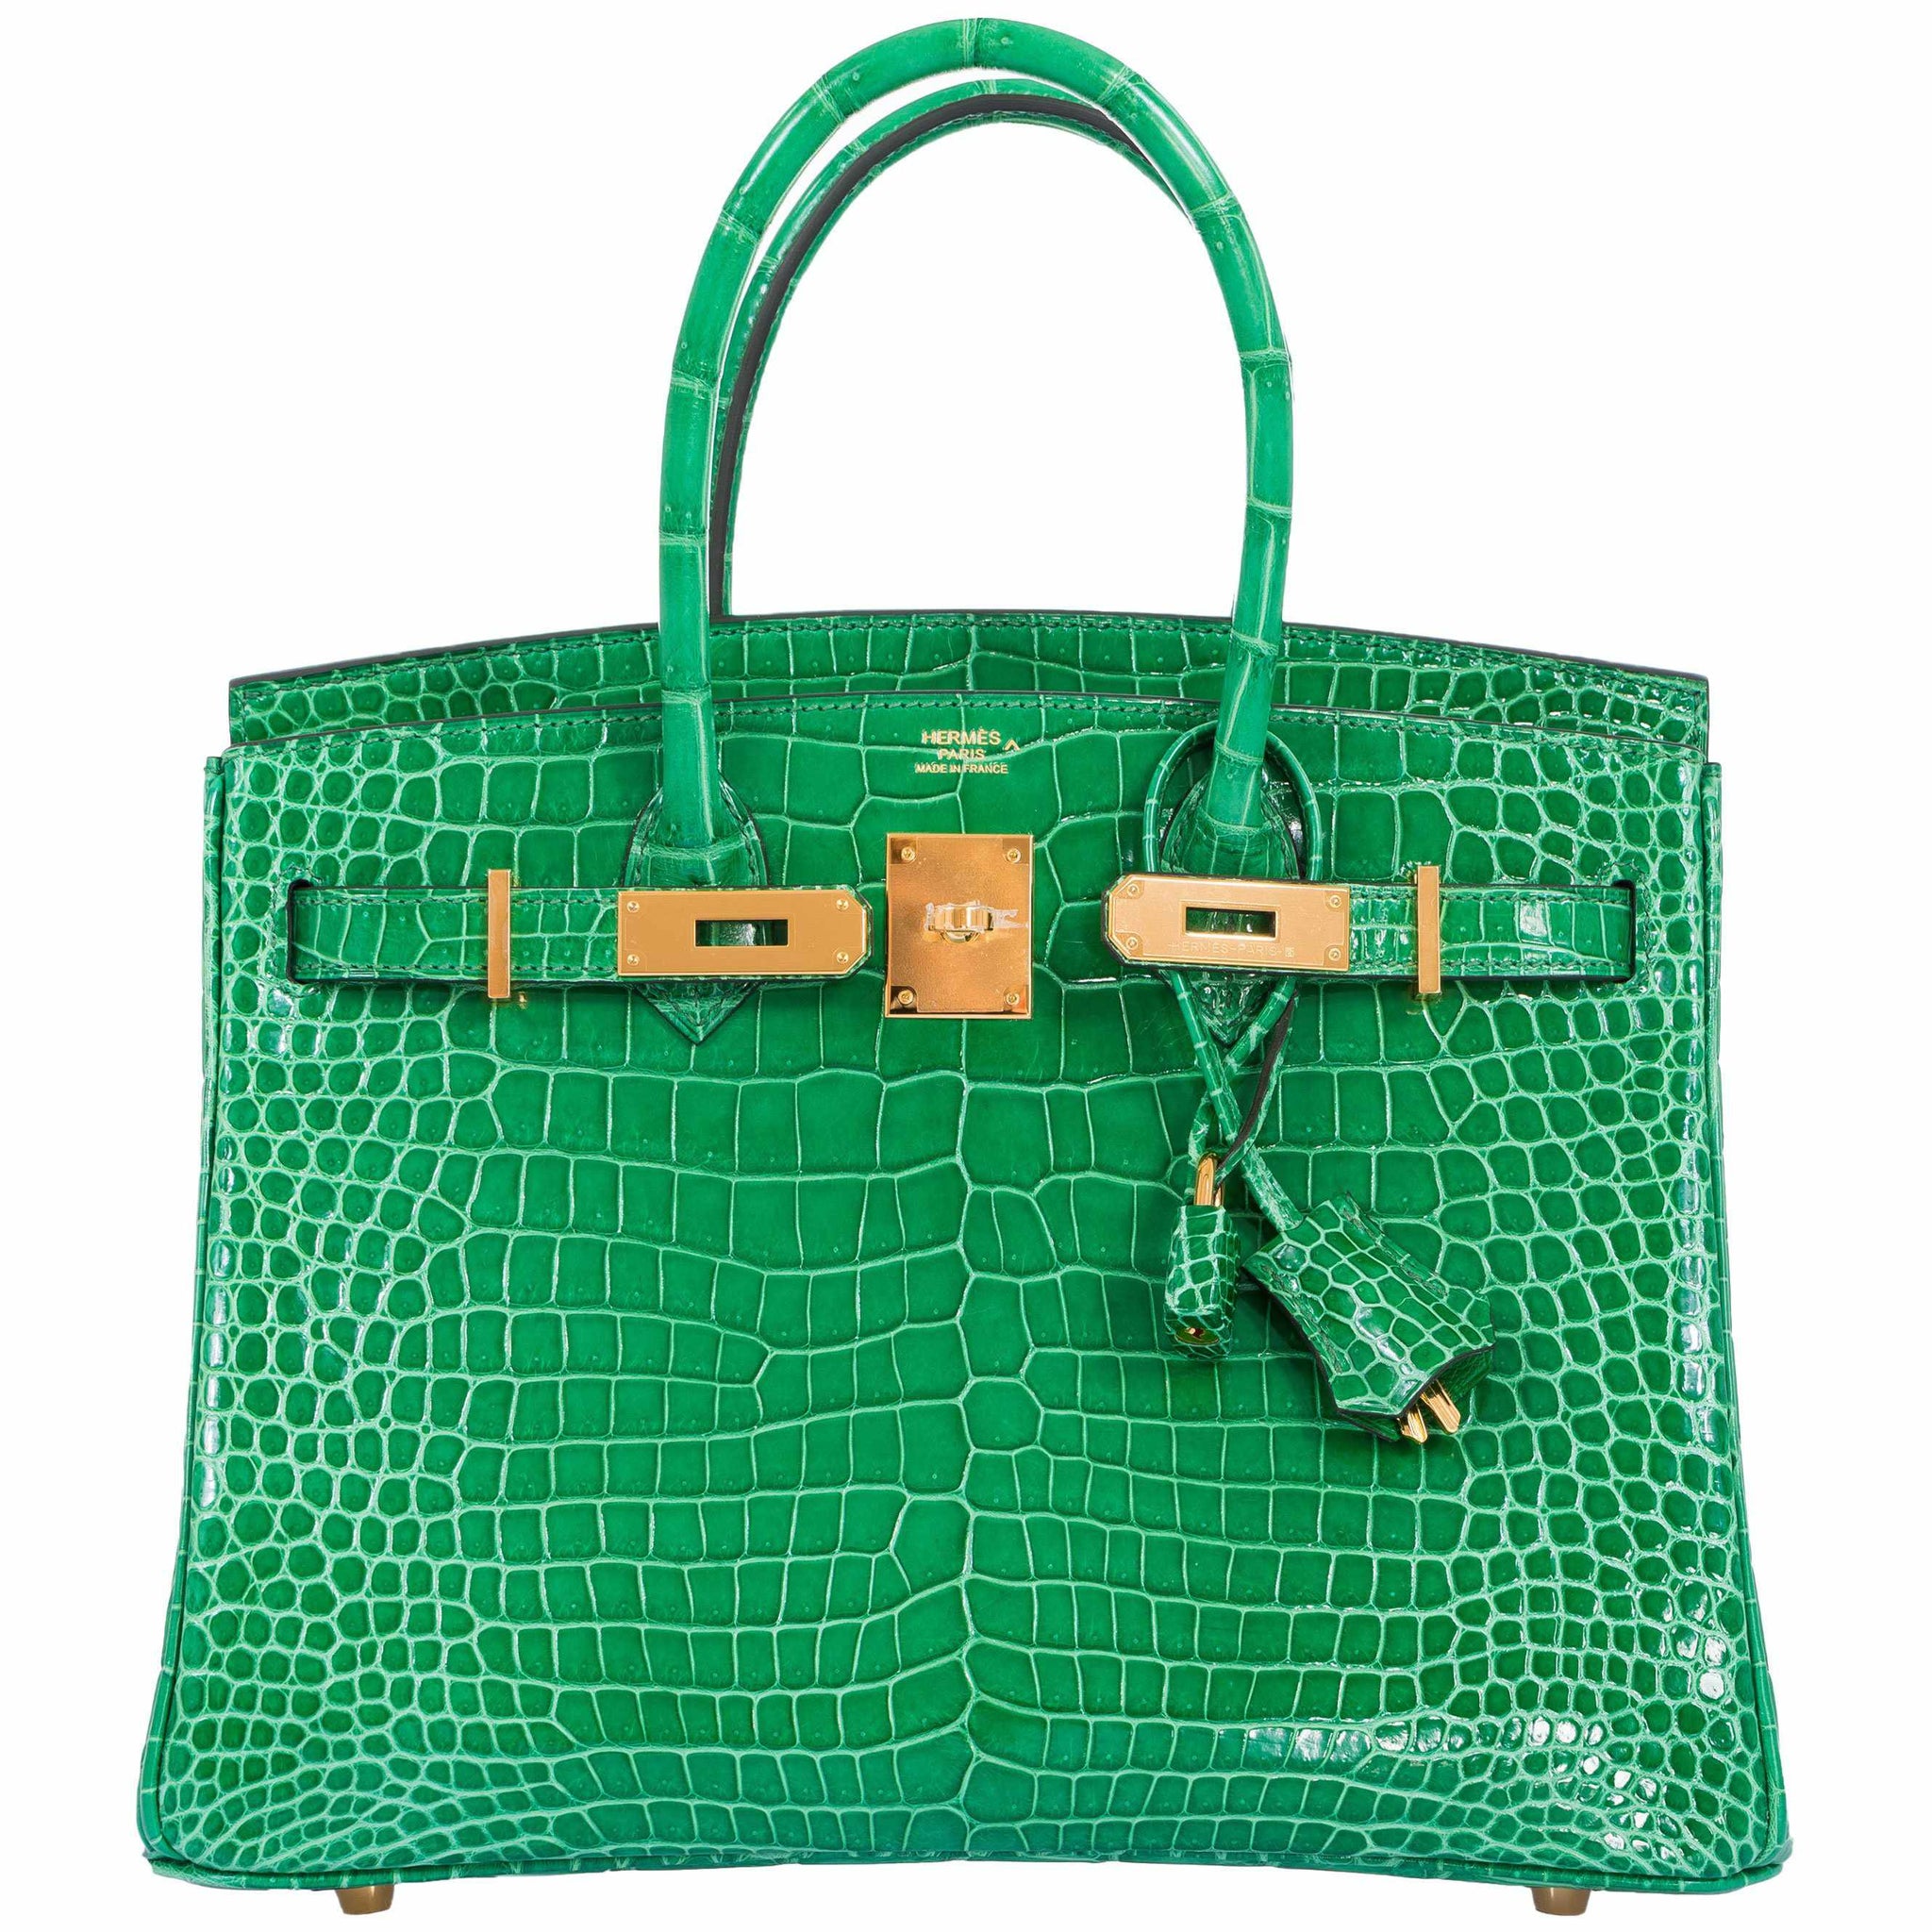 Hermes Birkin Bag 30cm Gris Elephant Porosus Crocodile Gold Hardware